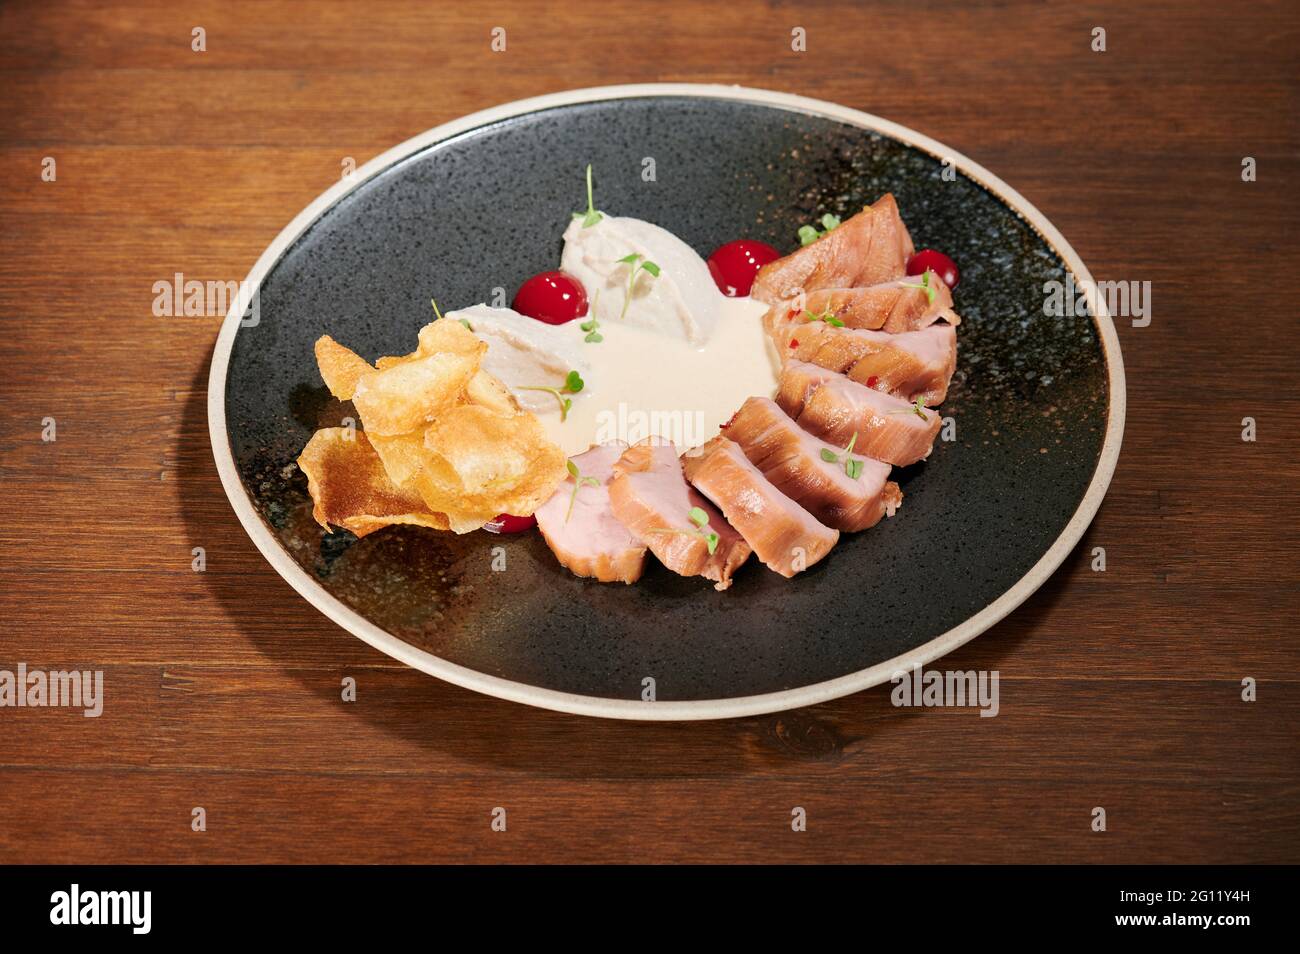 Healthy dinner meal on black plate table. Sliced pork meal Stock Photo